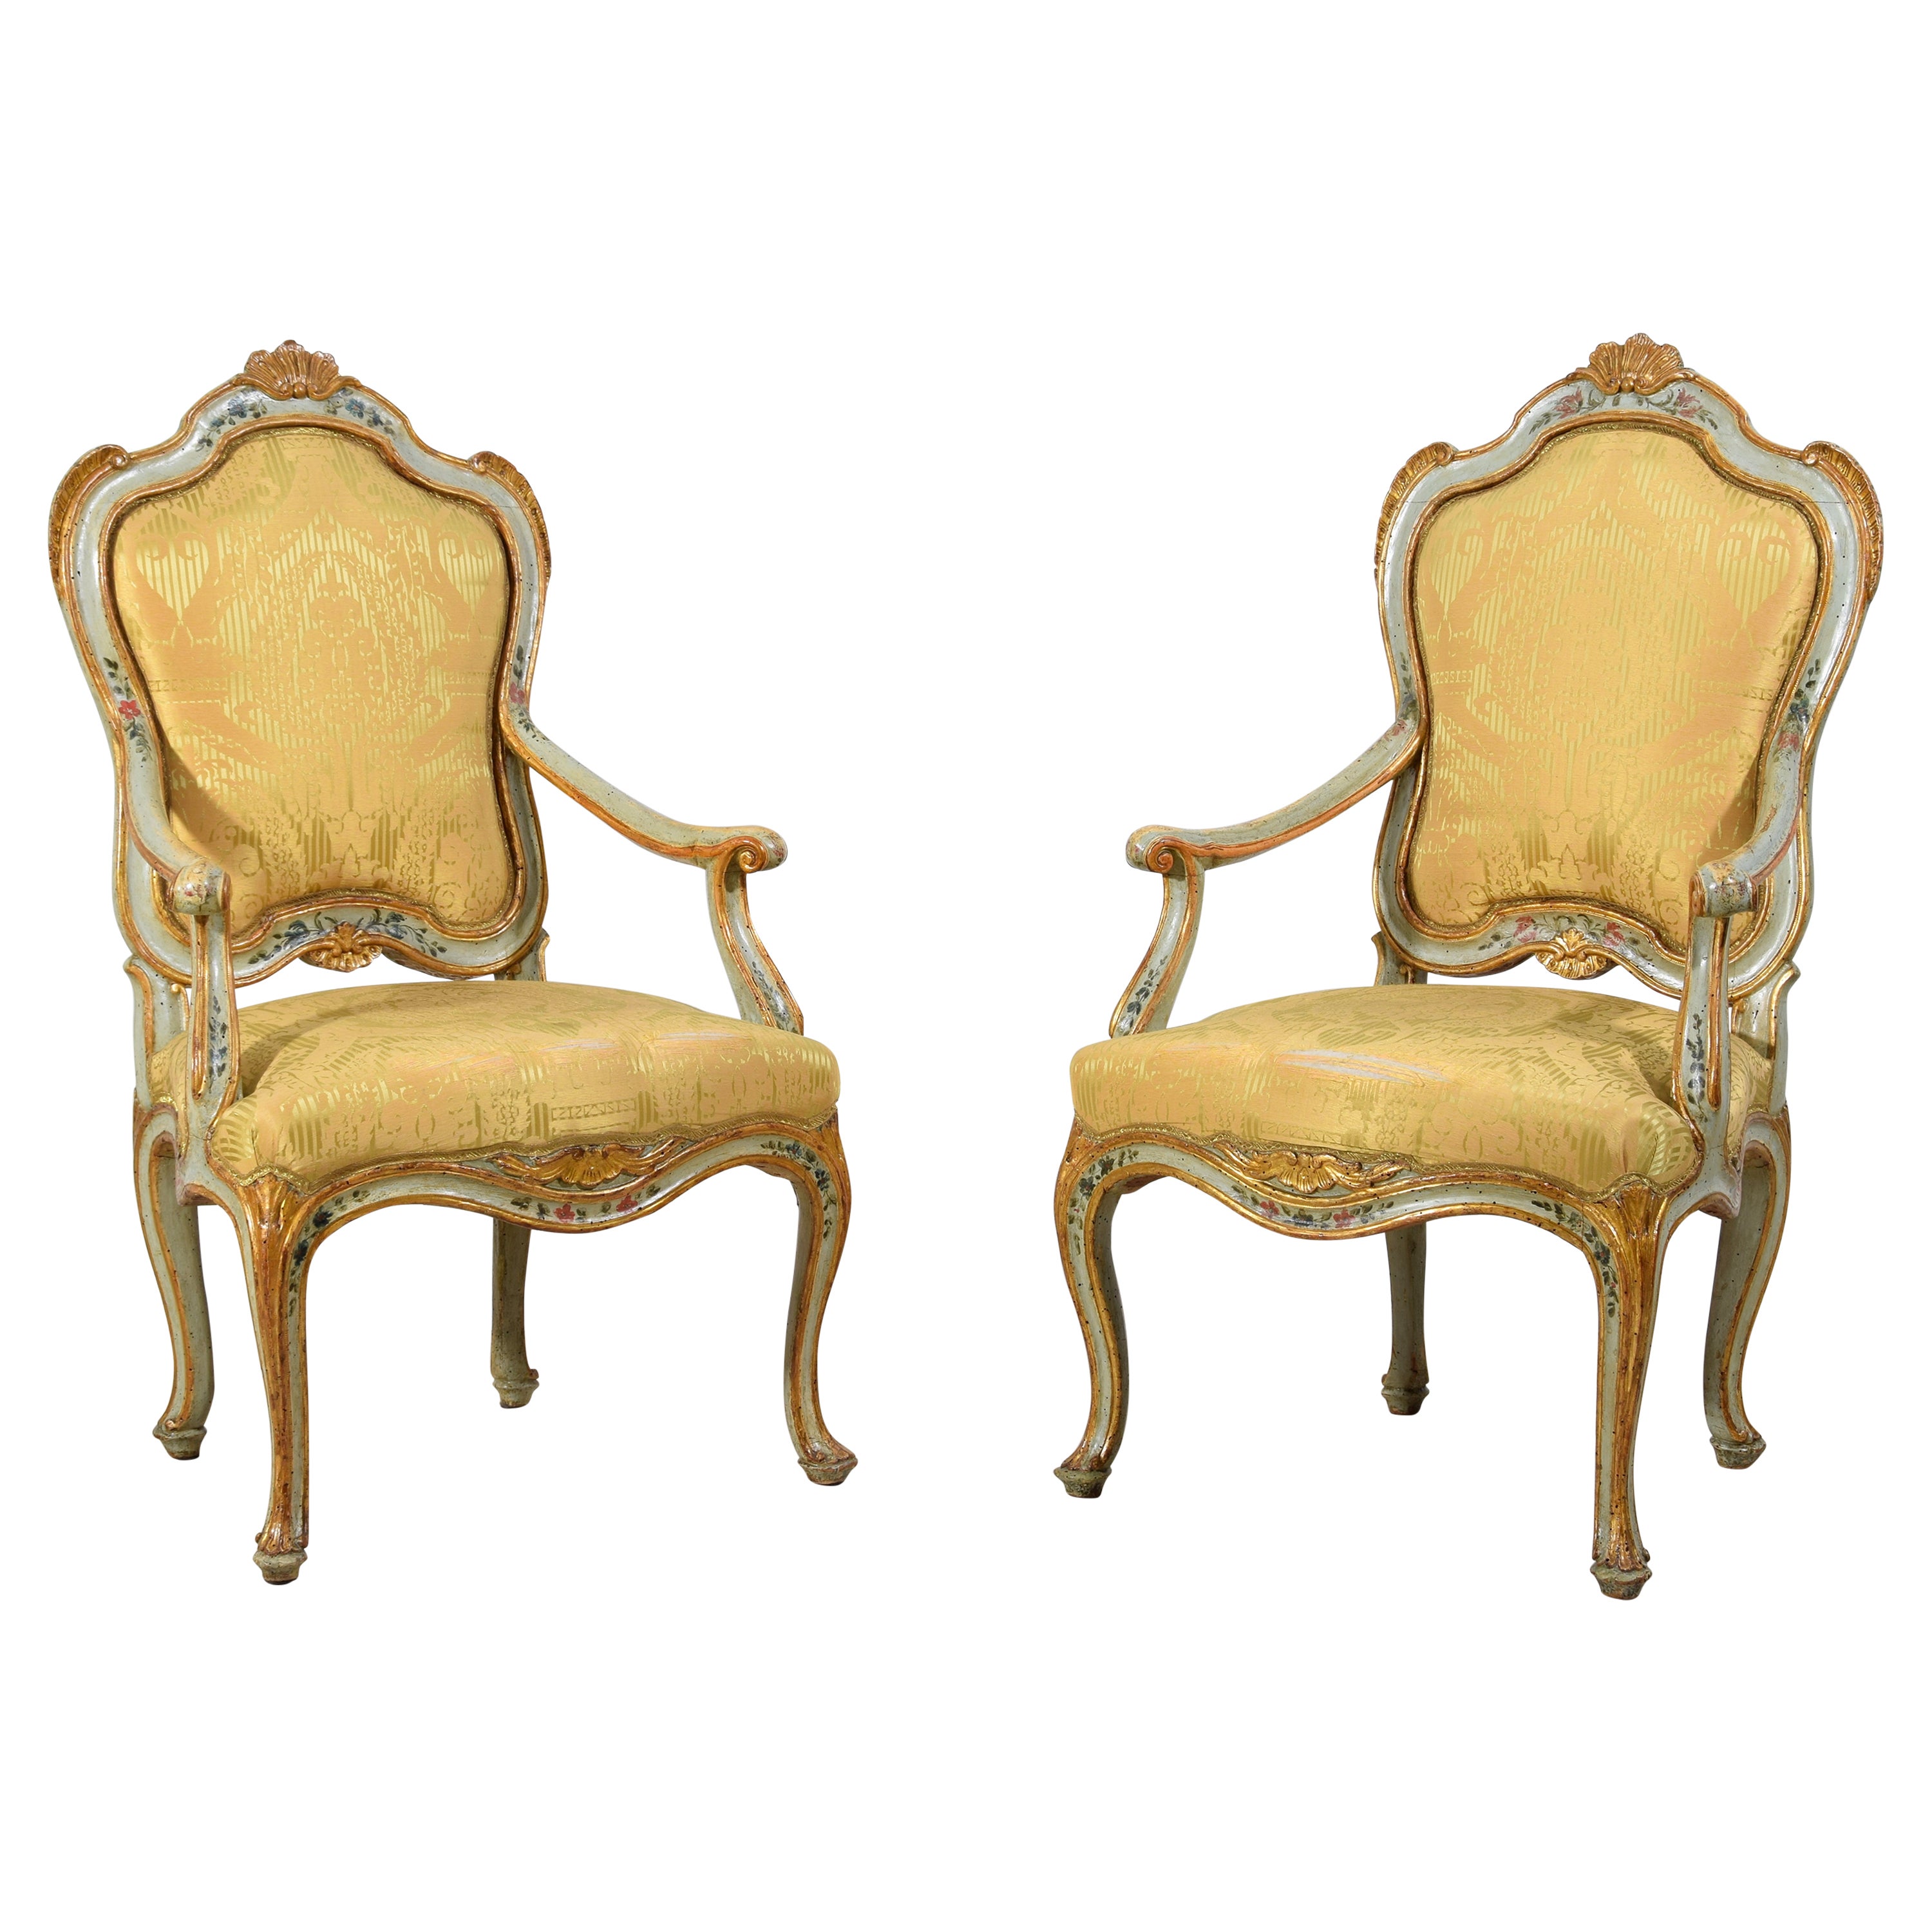 Paar venezianische Barocchetto-Sessel aus lackiertem vergoldetem Holz aus dem 18. Jahrhundert